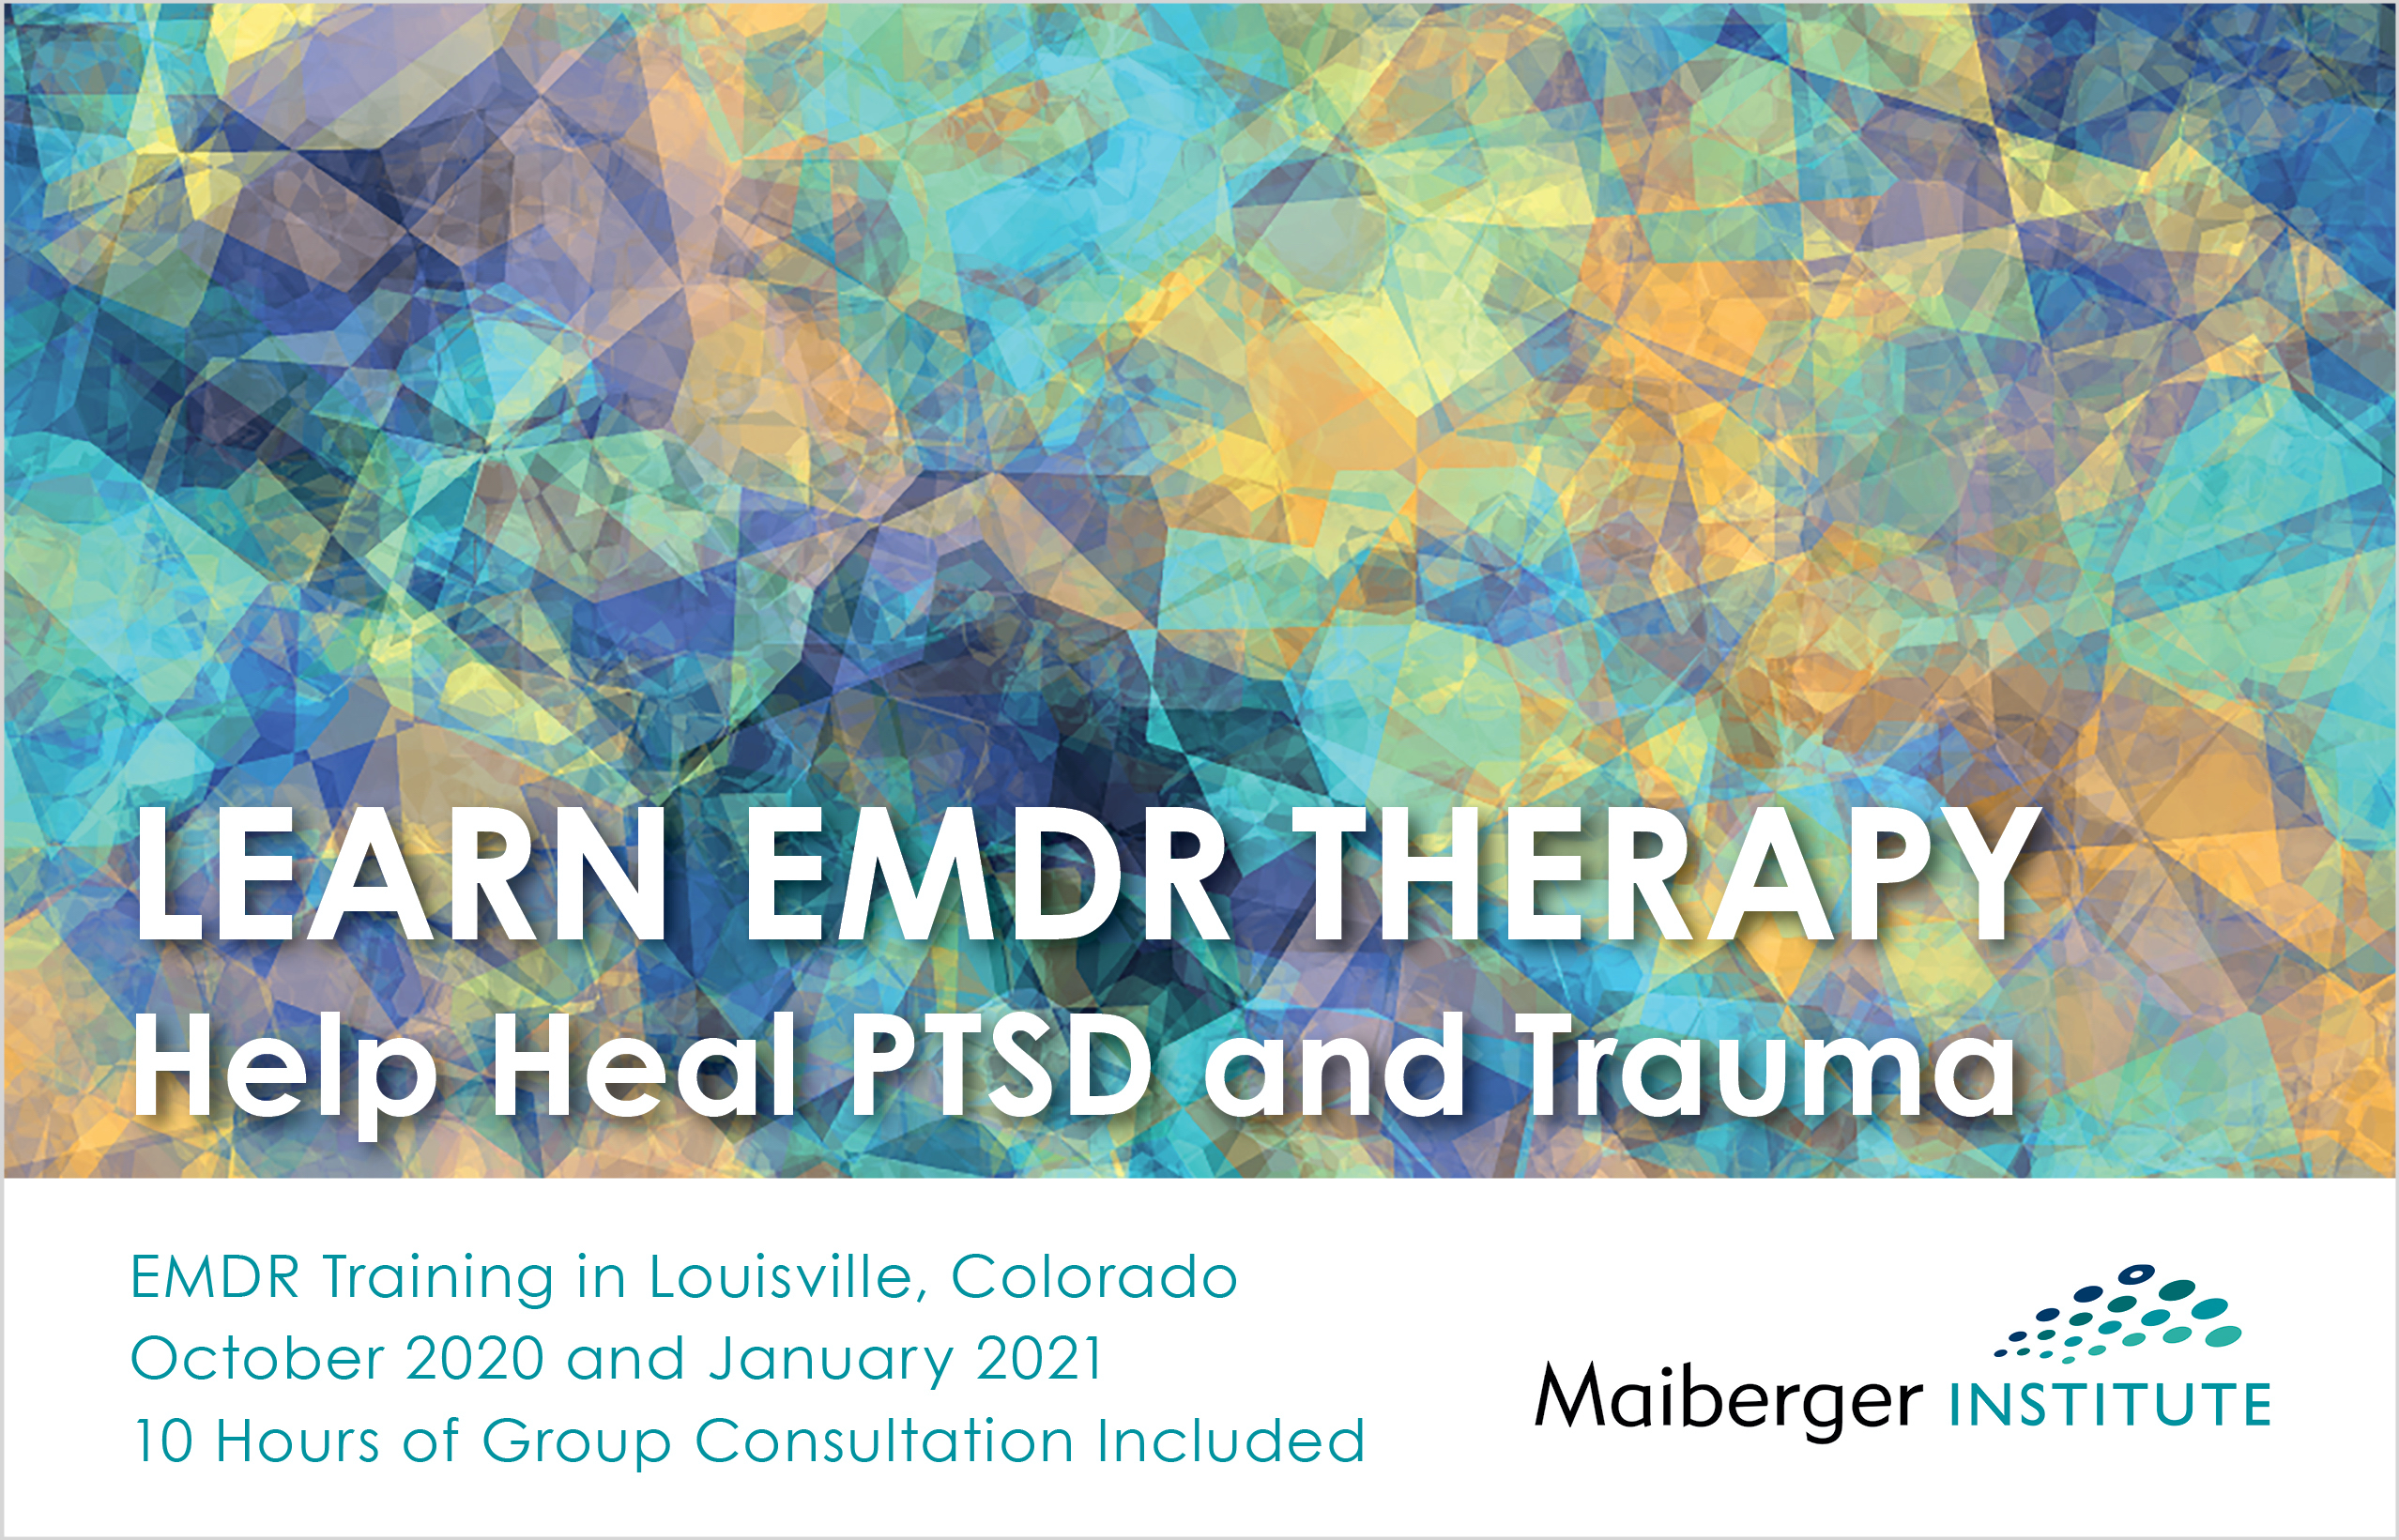 EMDR Training in Louisville, Colorado - October 2020 and January 2021 - EMDR Events Calendar - Maiberger Institute